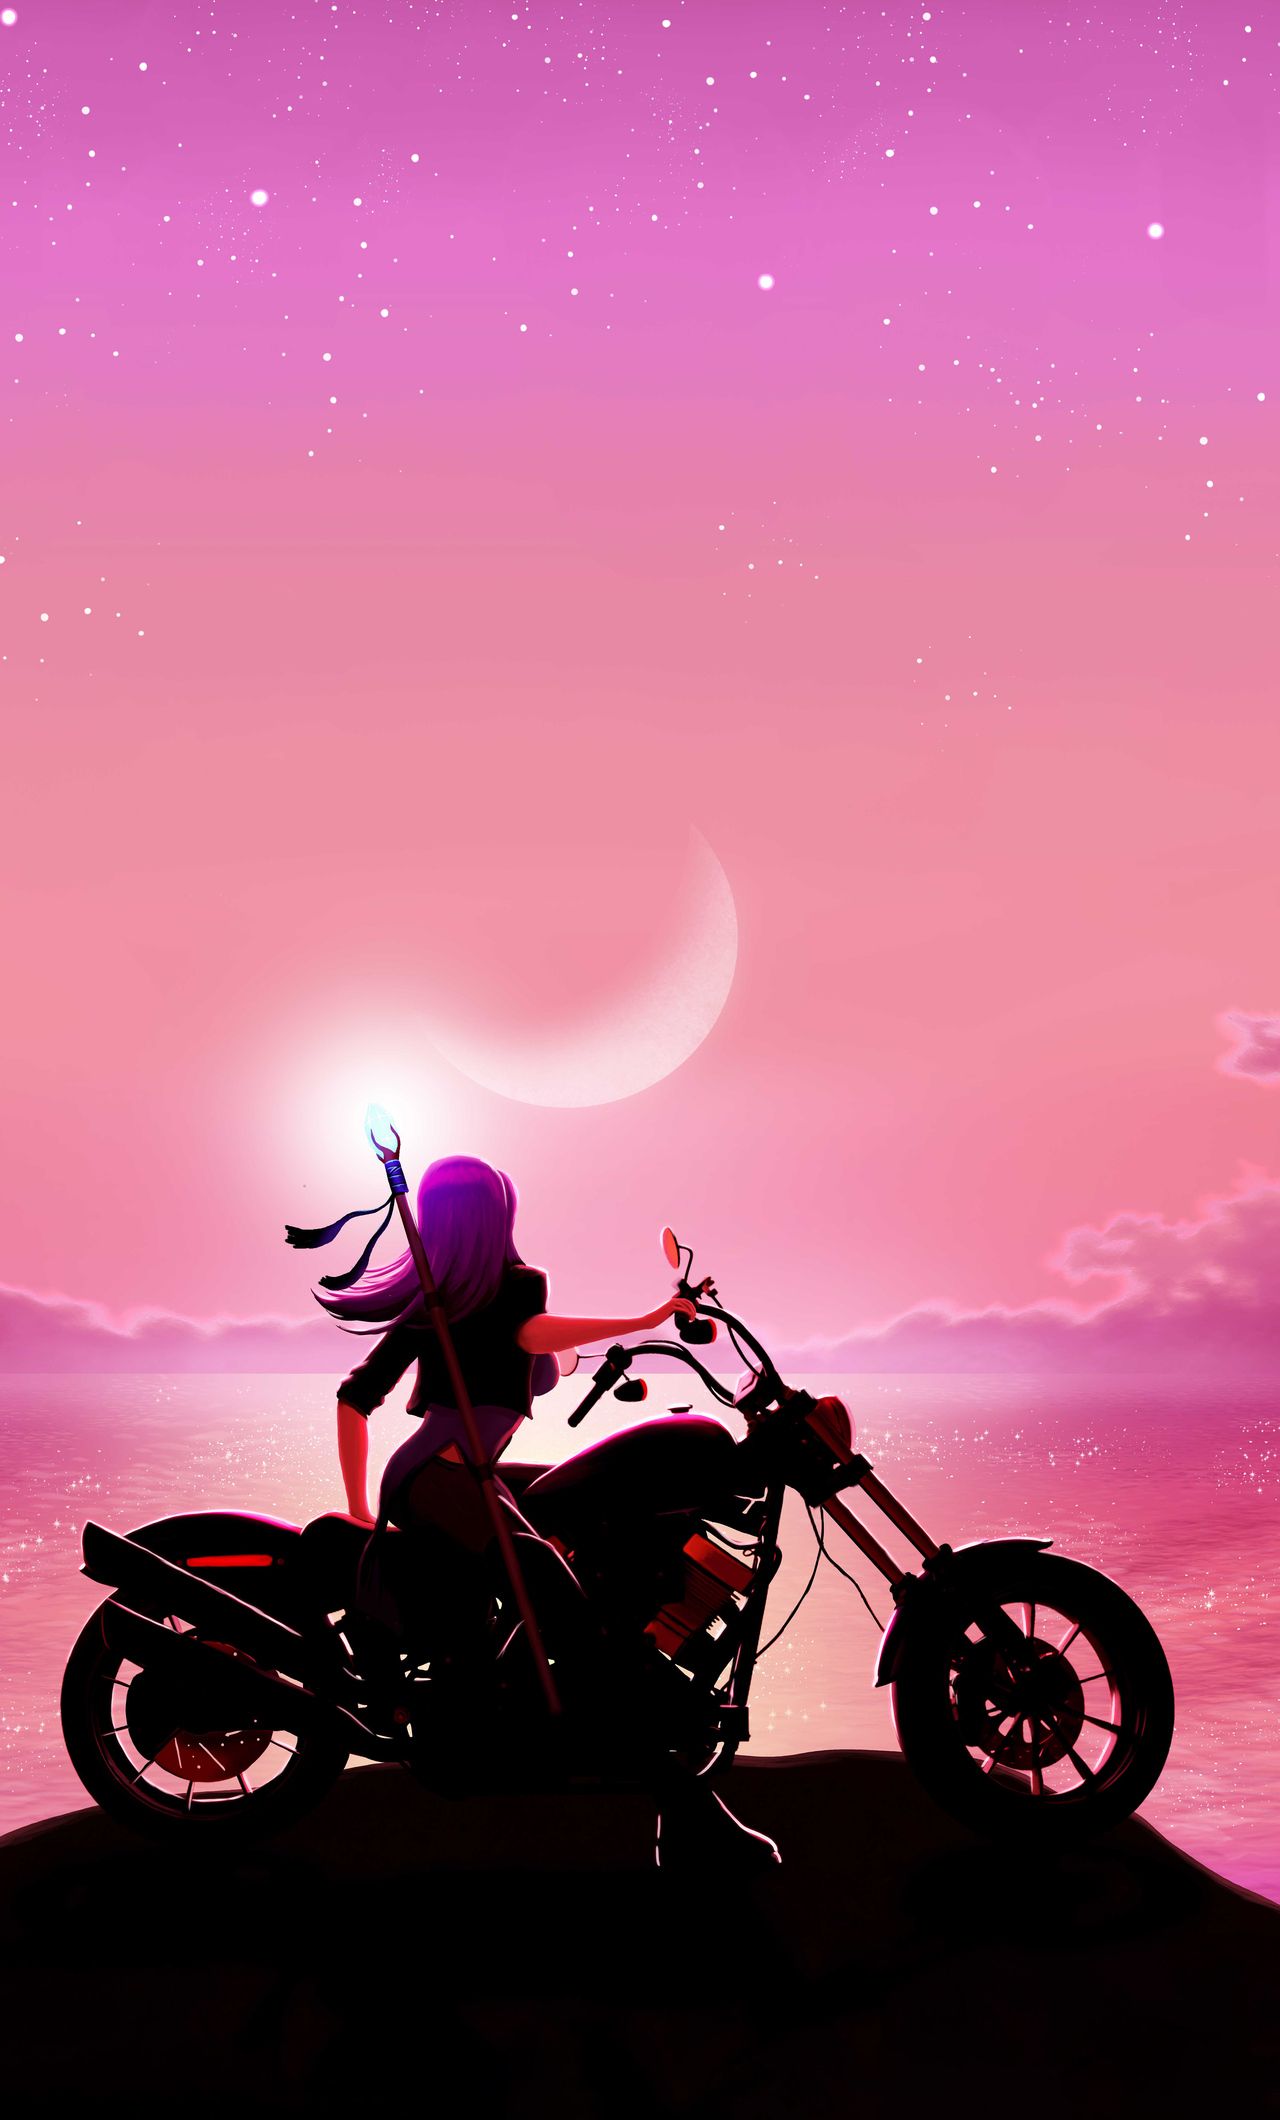  Motorrad Girl Hintergrundbild 1280x2120. Motorcycle Girl 8k iPhone HD 4k Wallpaper, Image, Background, Photo and Picture